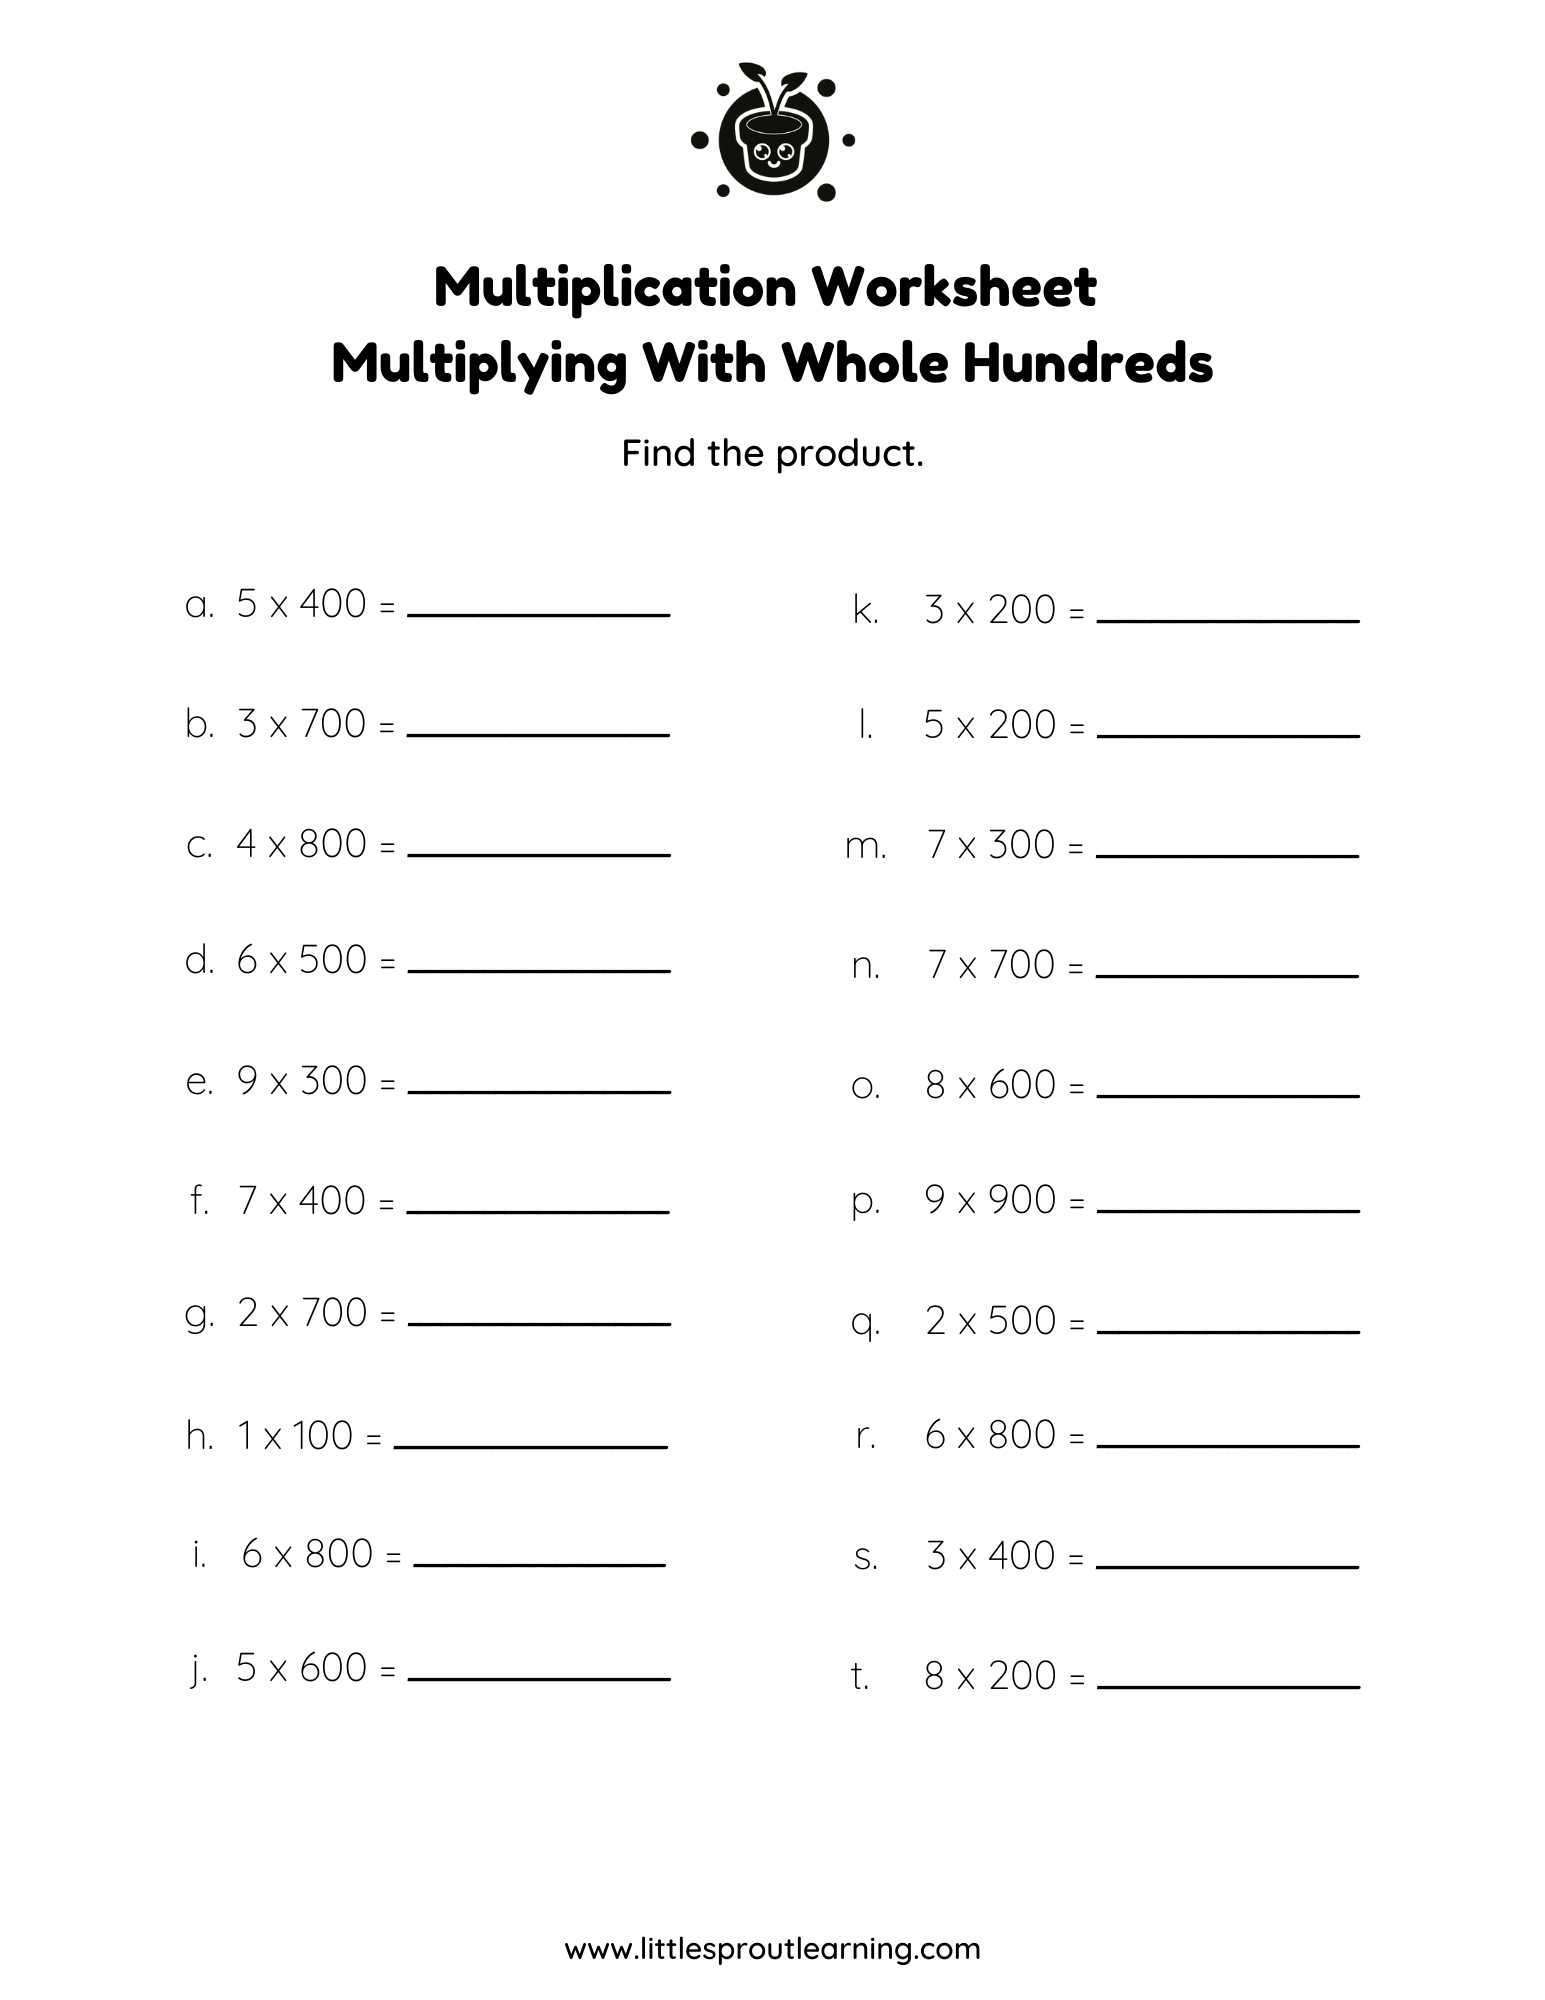 Multiplication Worksheet – Multiplying With Whole Hundreds